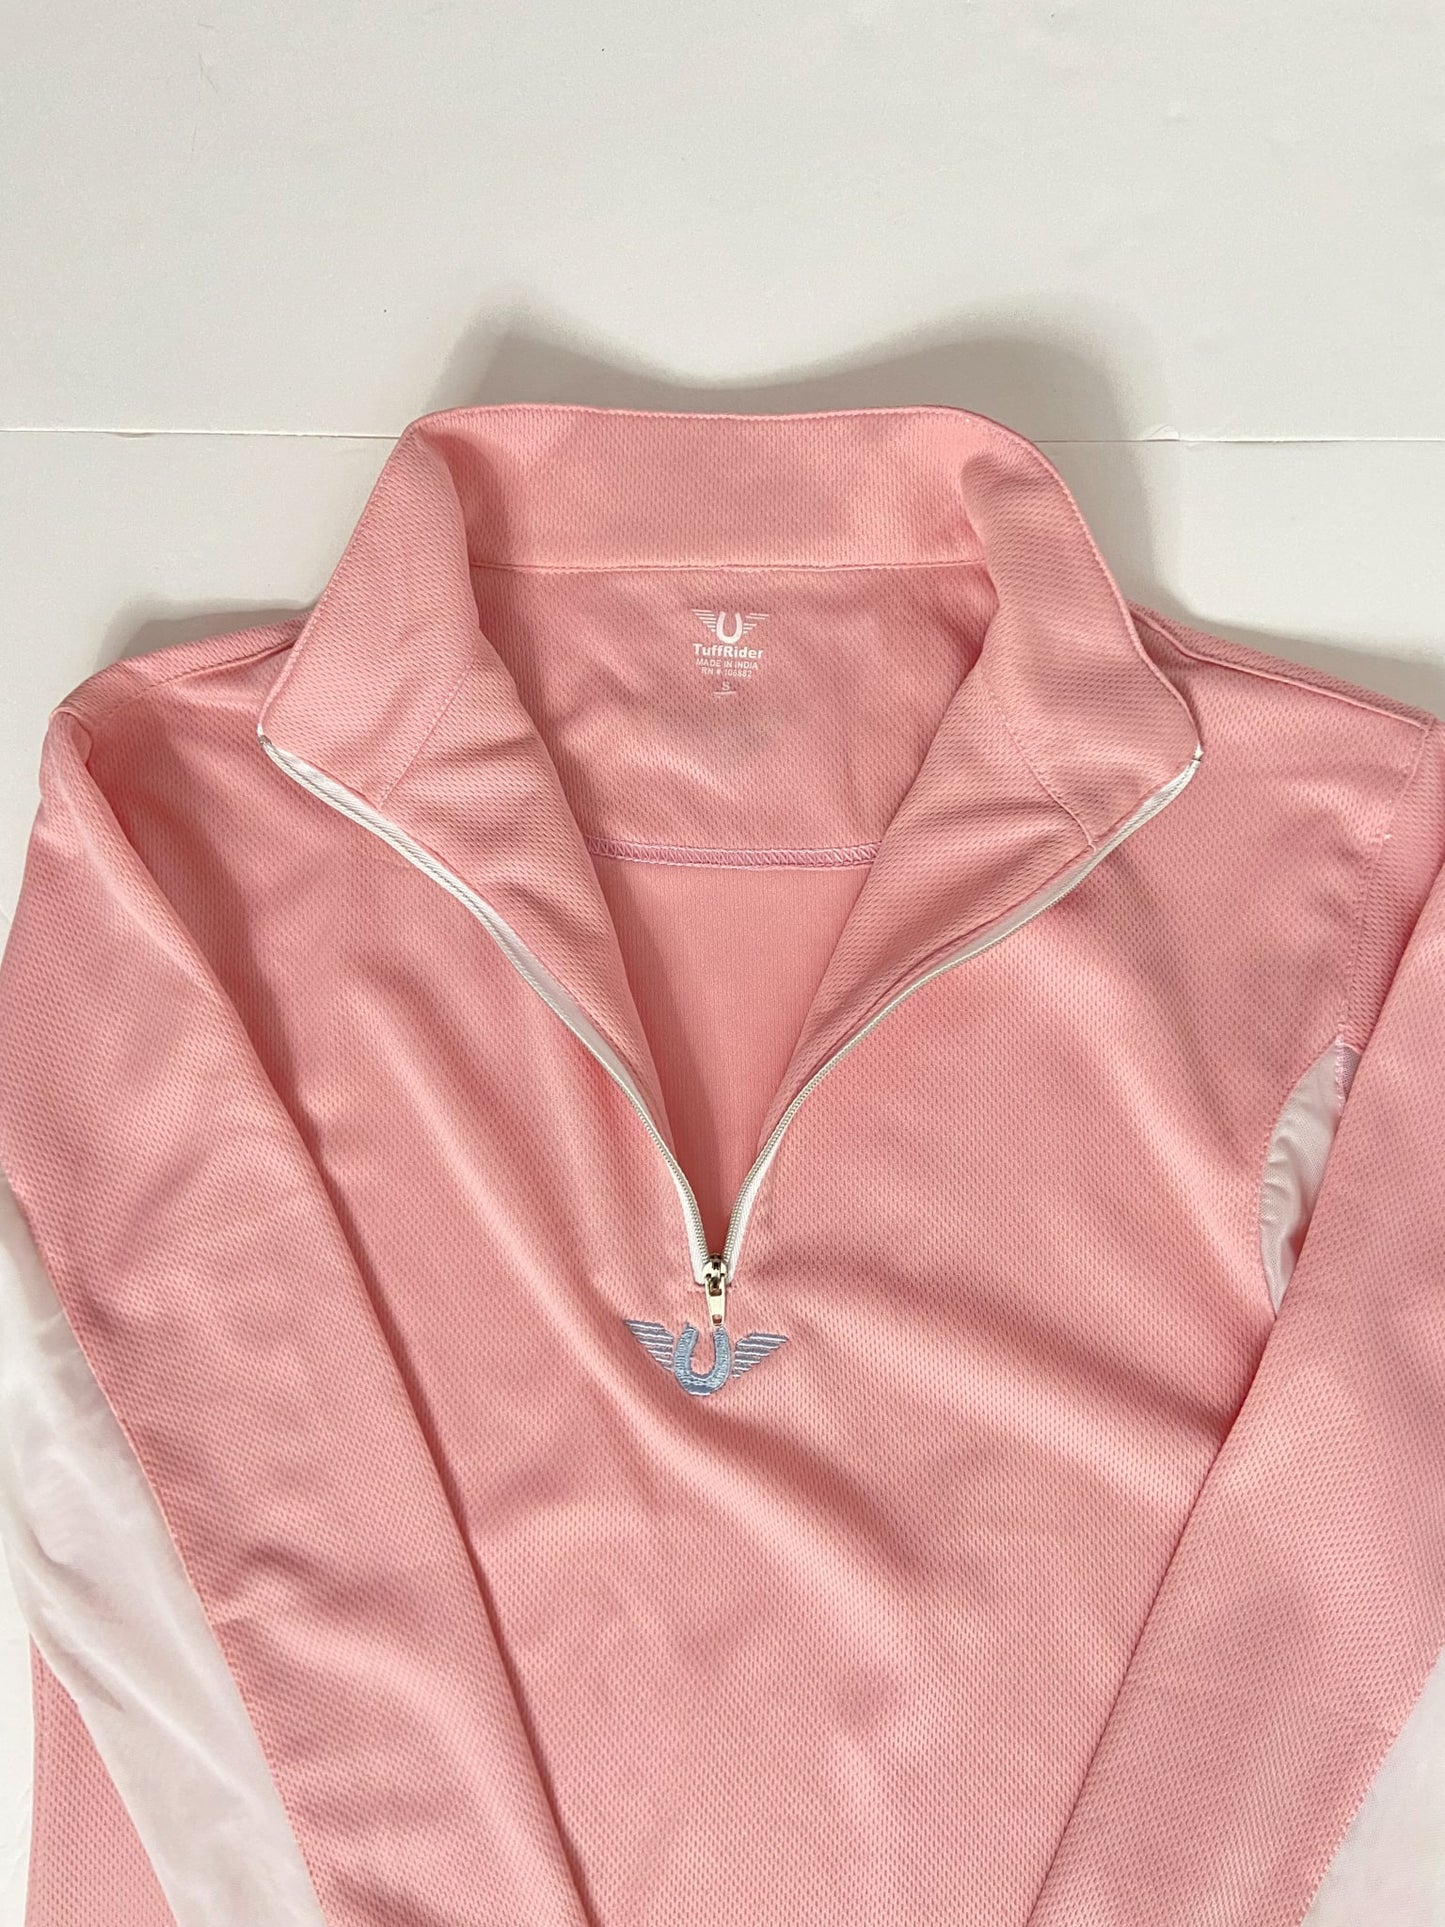 TuffRider Ventilated Technical Long Sleeve Sport Shirt - Pink - Women's Small